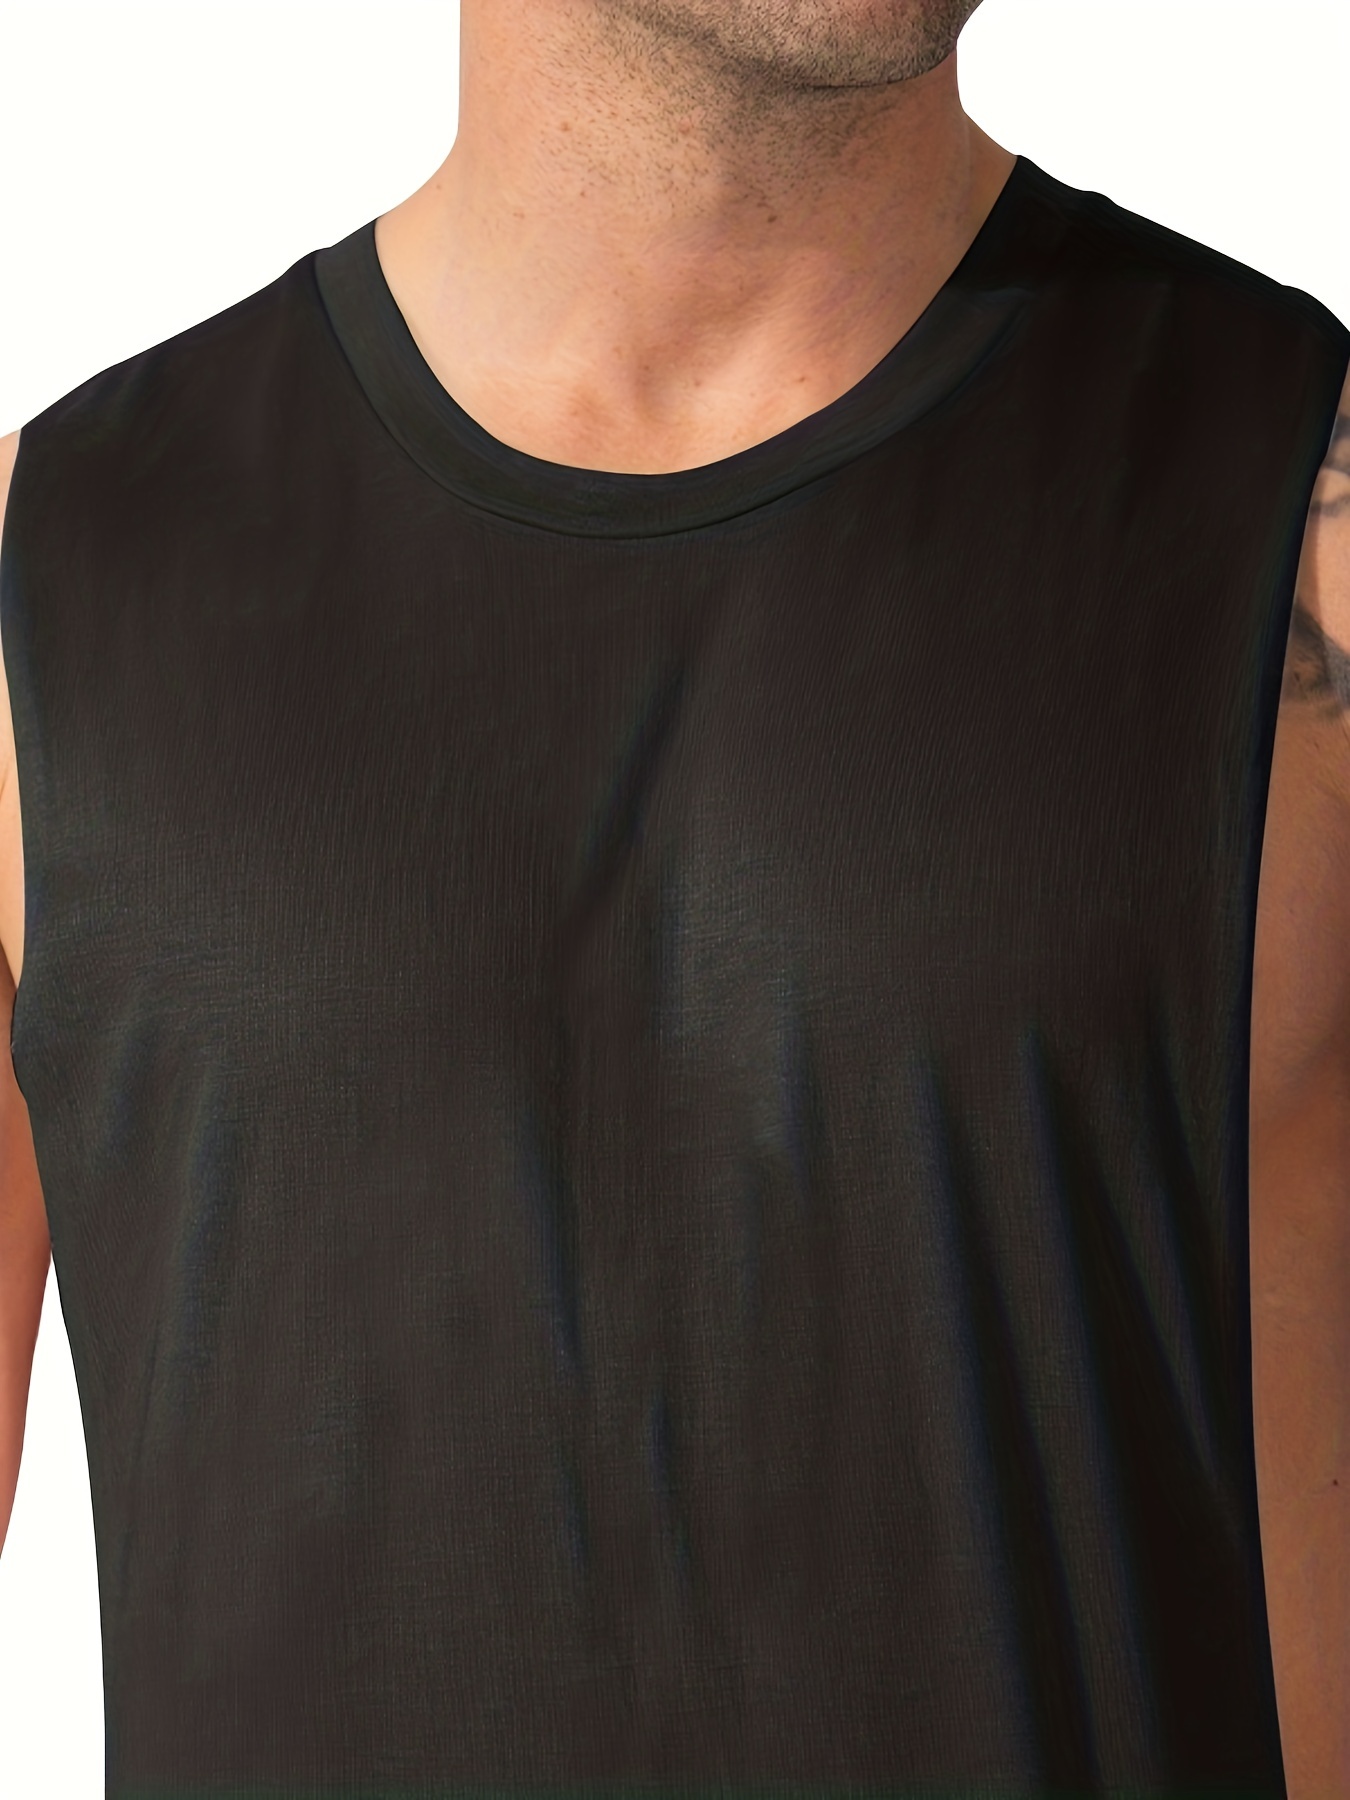 Men's Regular Basic Loose Tank Top, Casual Comfy Vest For Summer, Men's  Clothing Top For Gym Fitness Workout